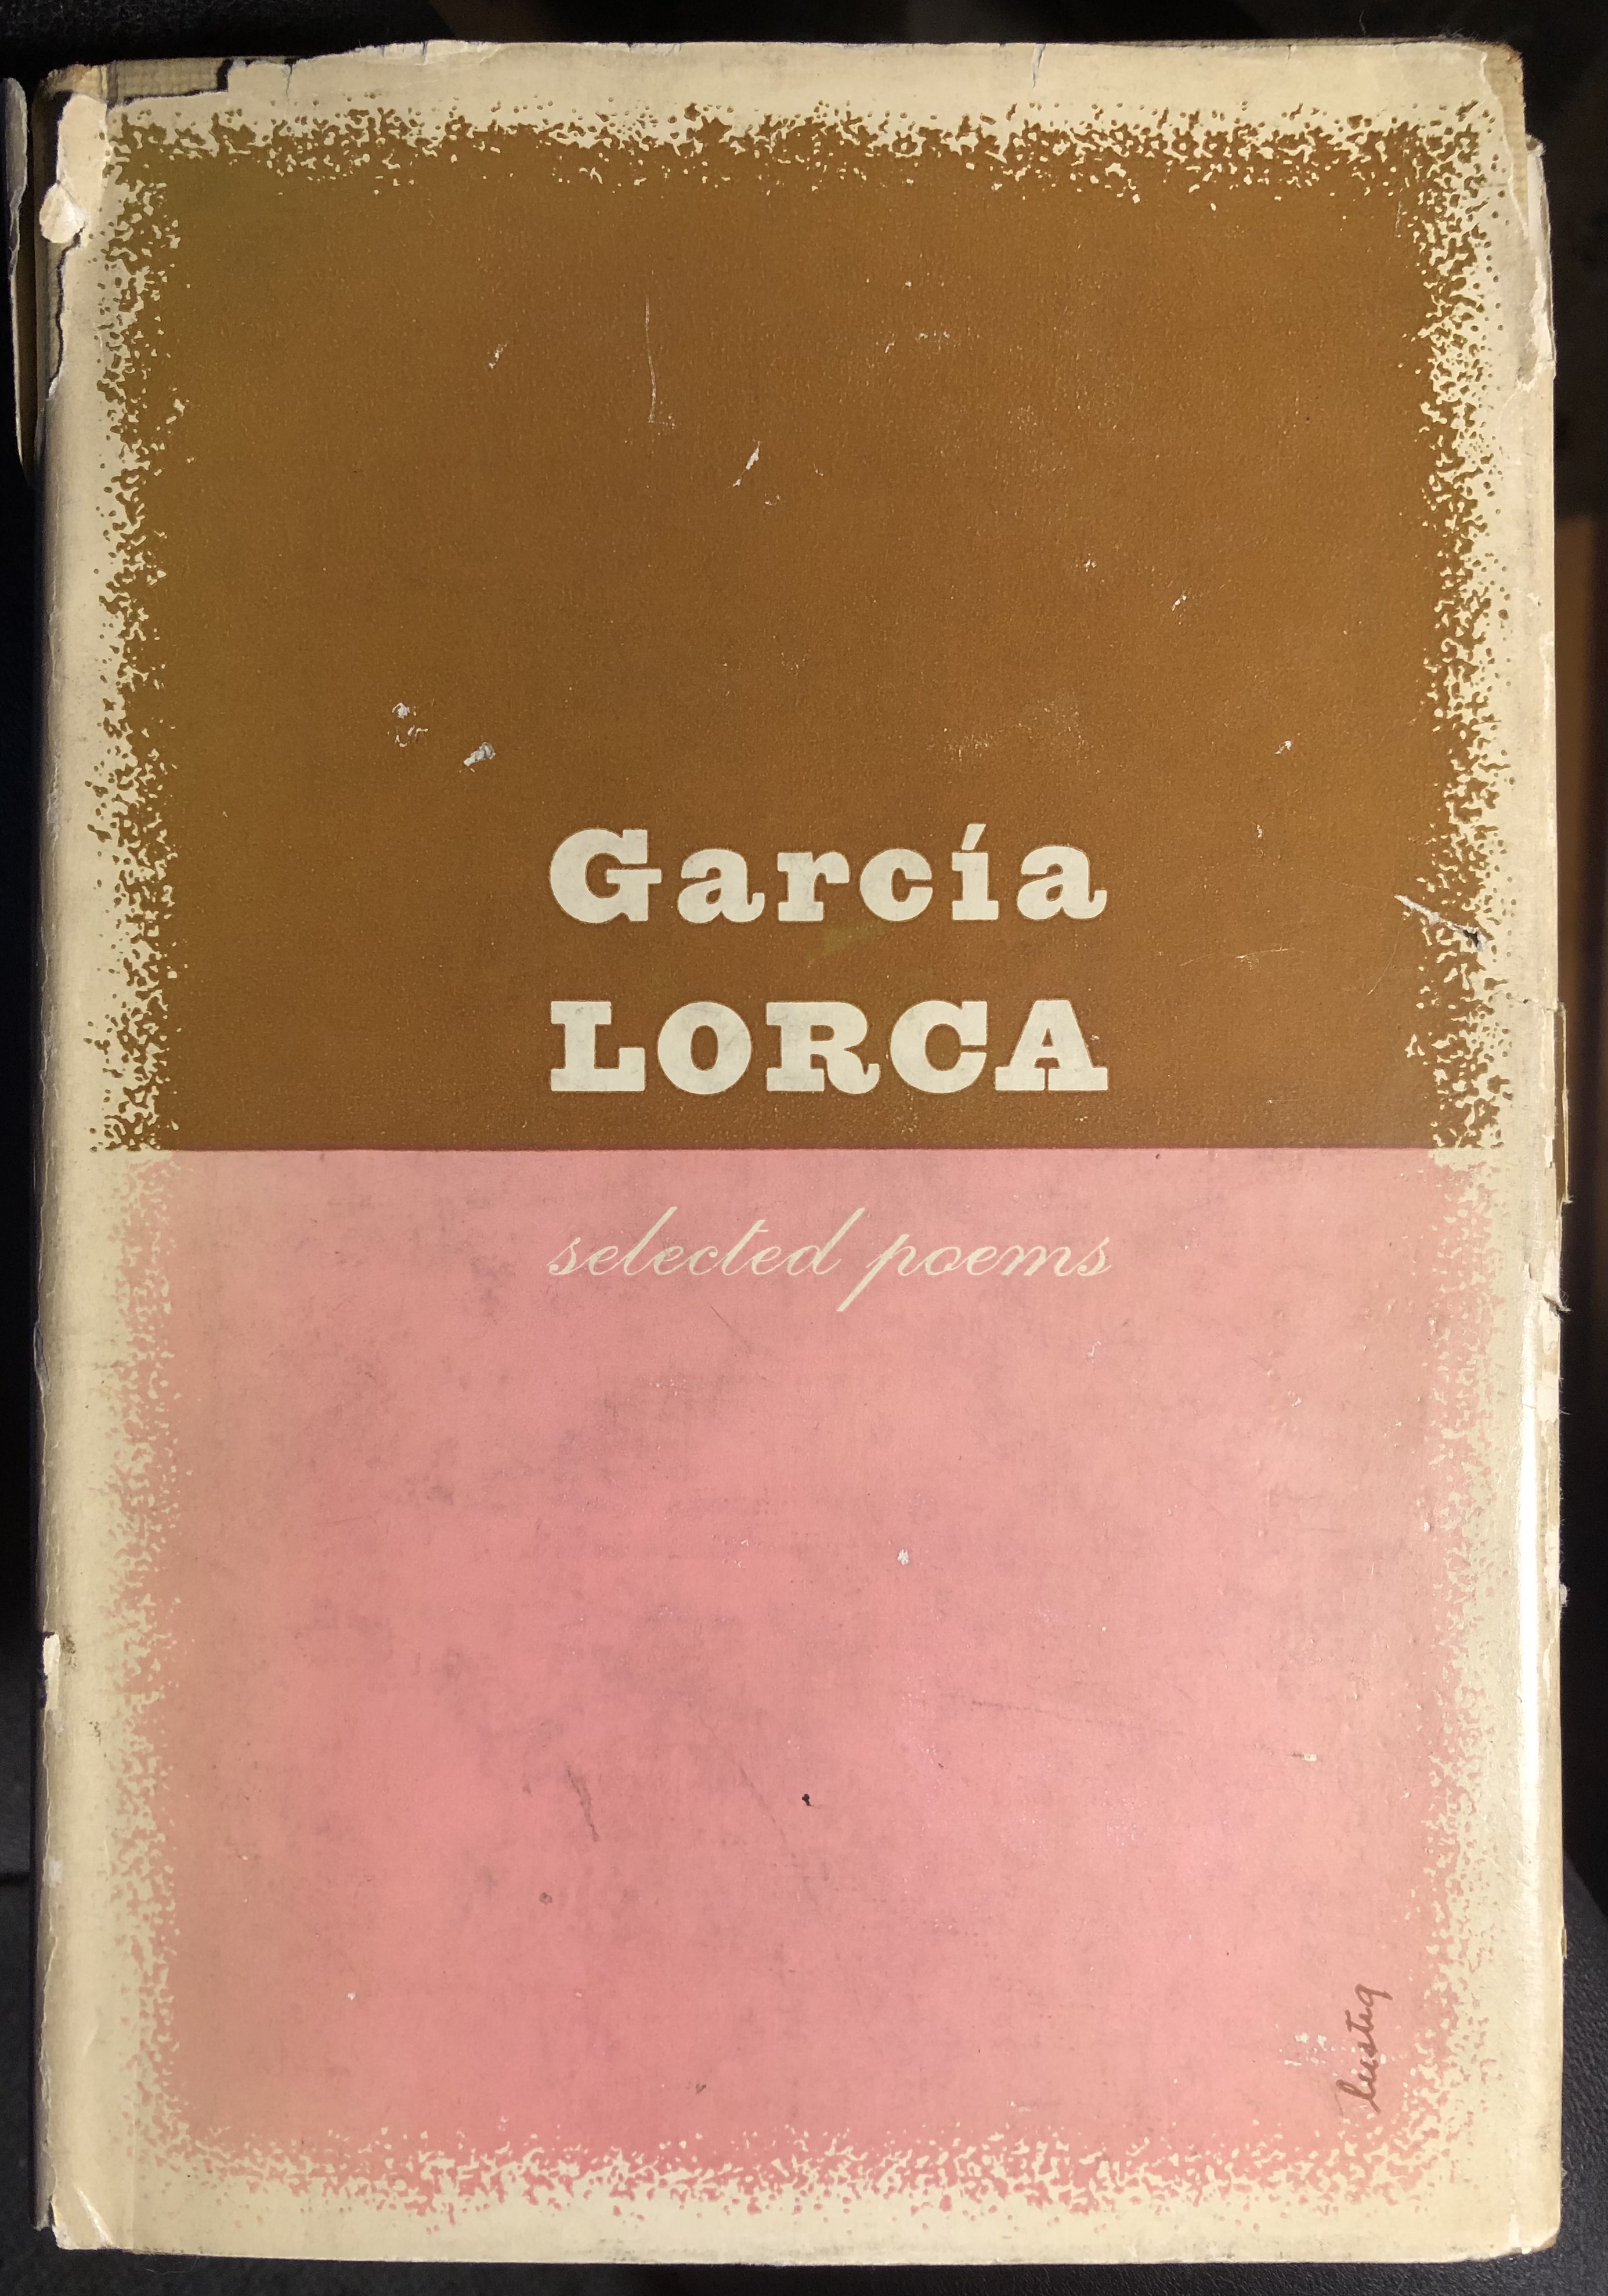 Federico García Lorca: Selected poems (1955, New Directions)